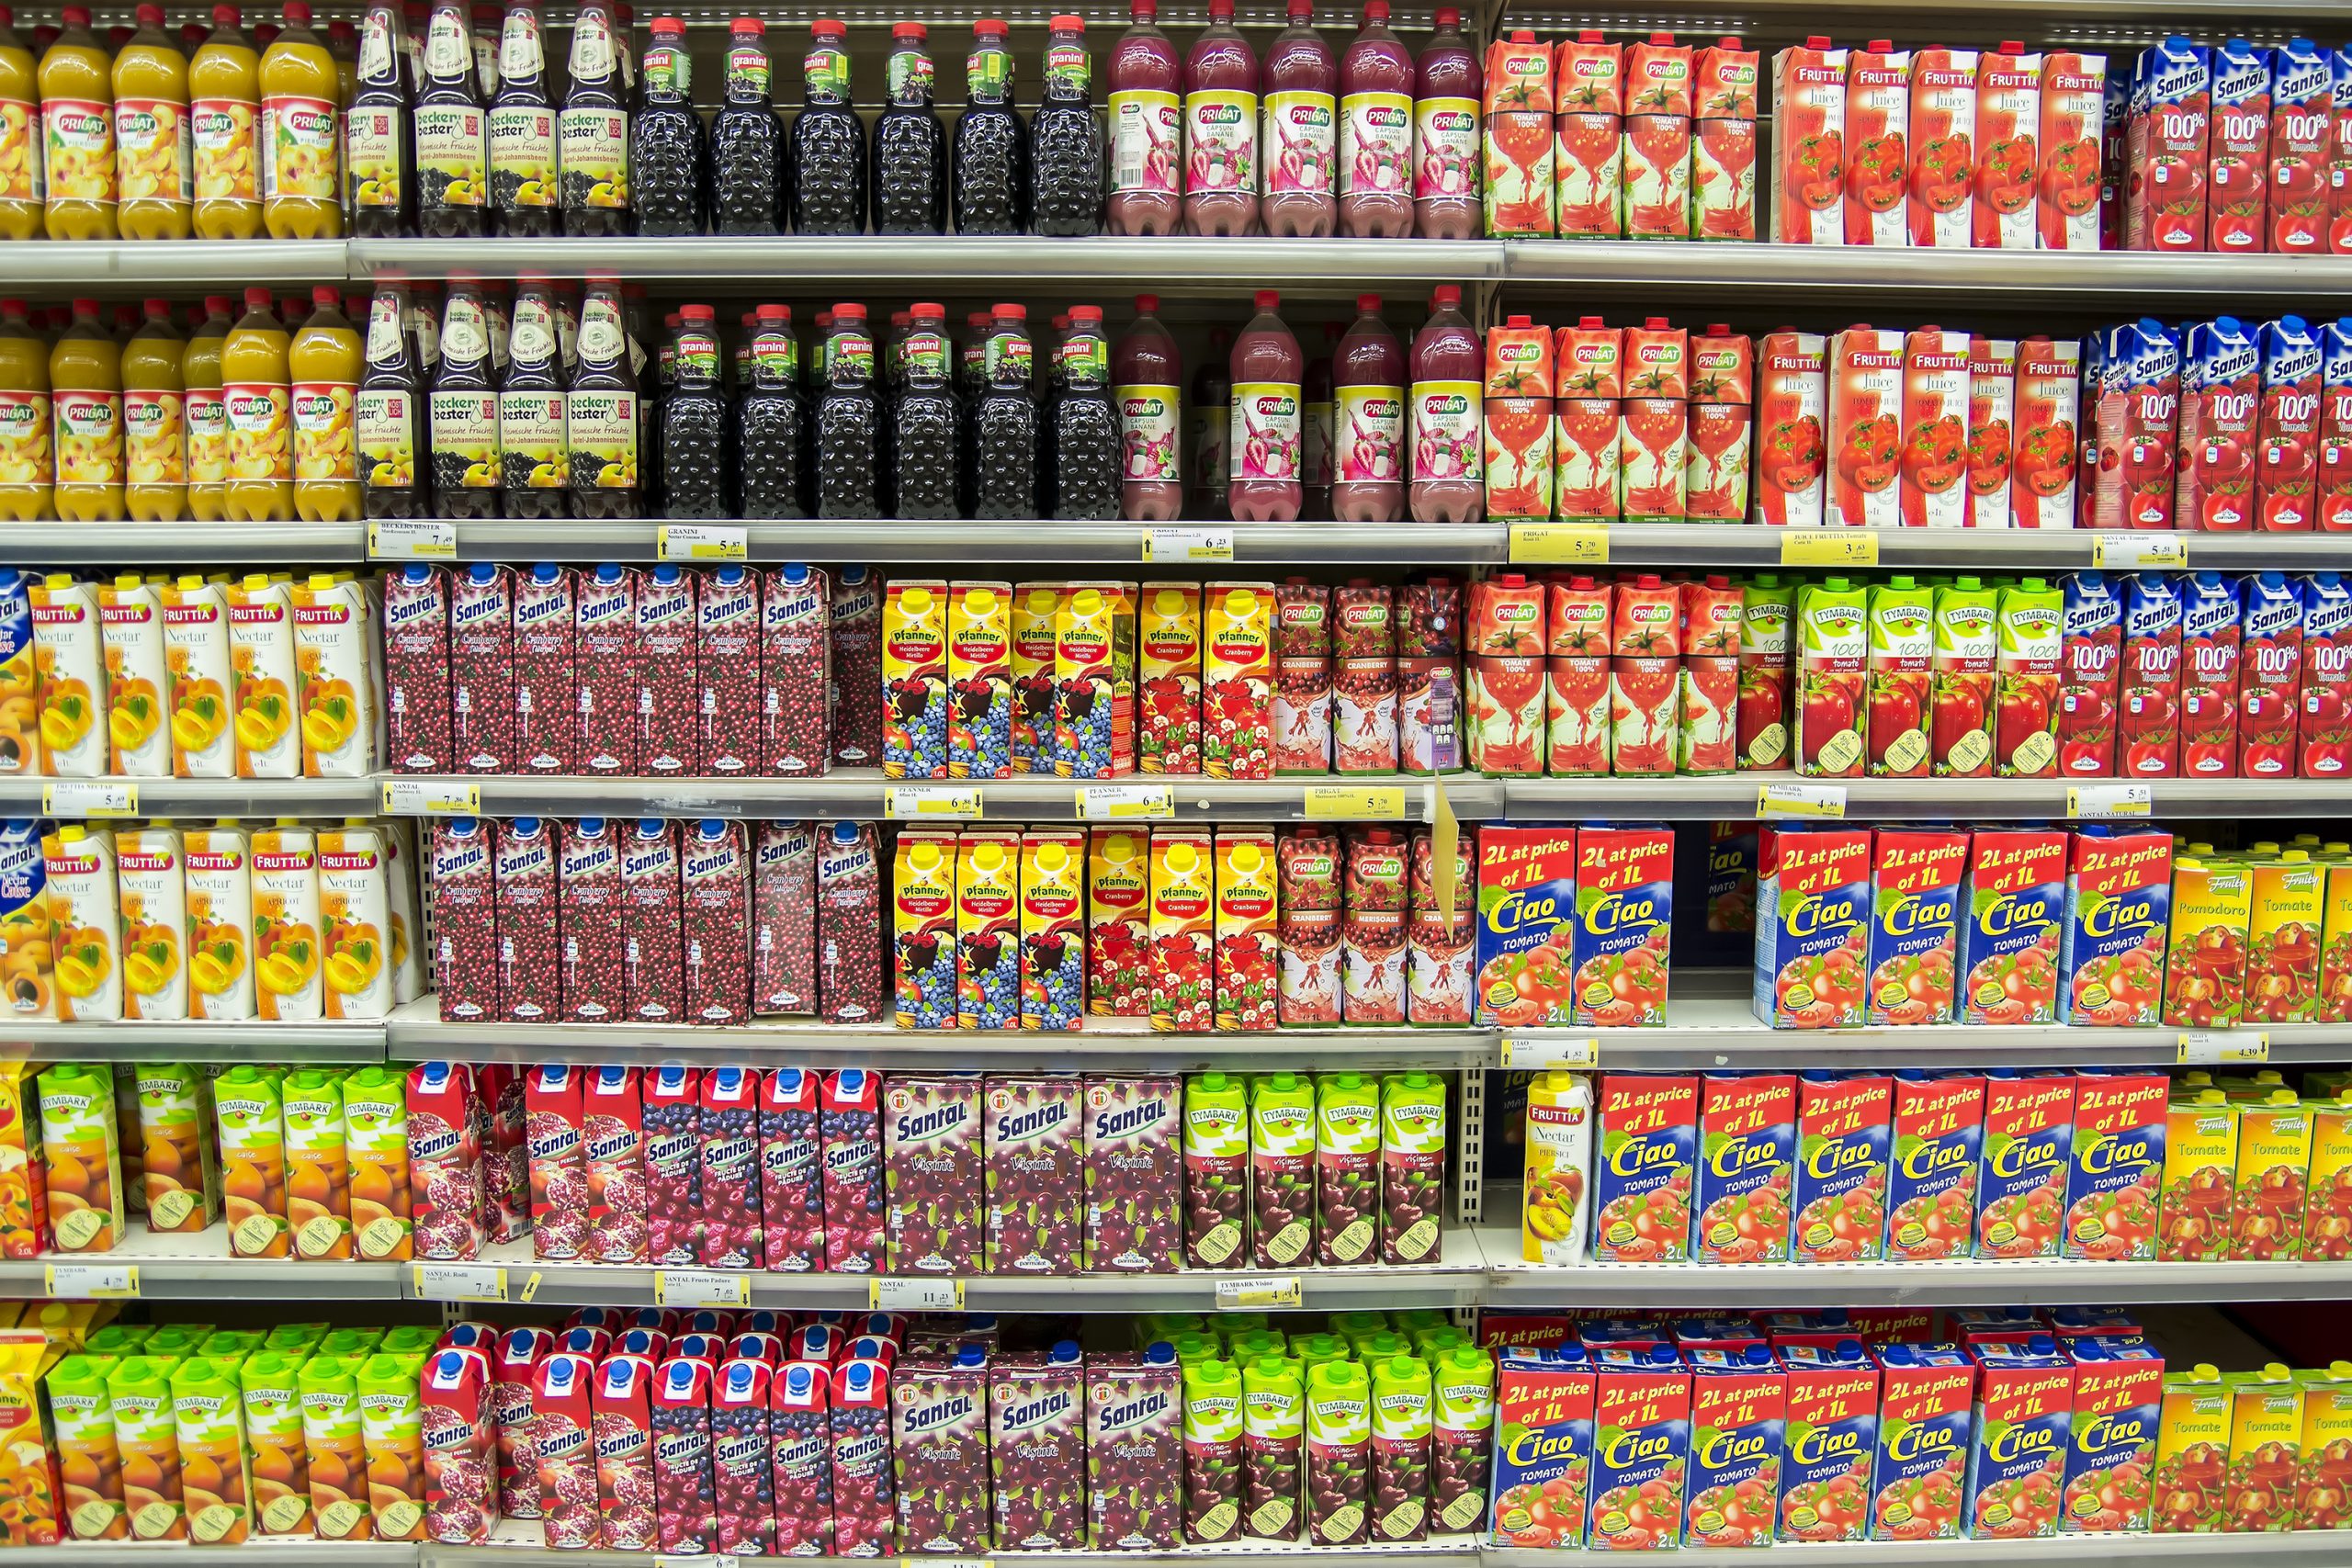 https://depositphotos.com/22213327/stock-photo-fruit-juice-bottles.html